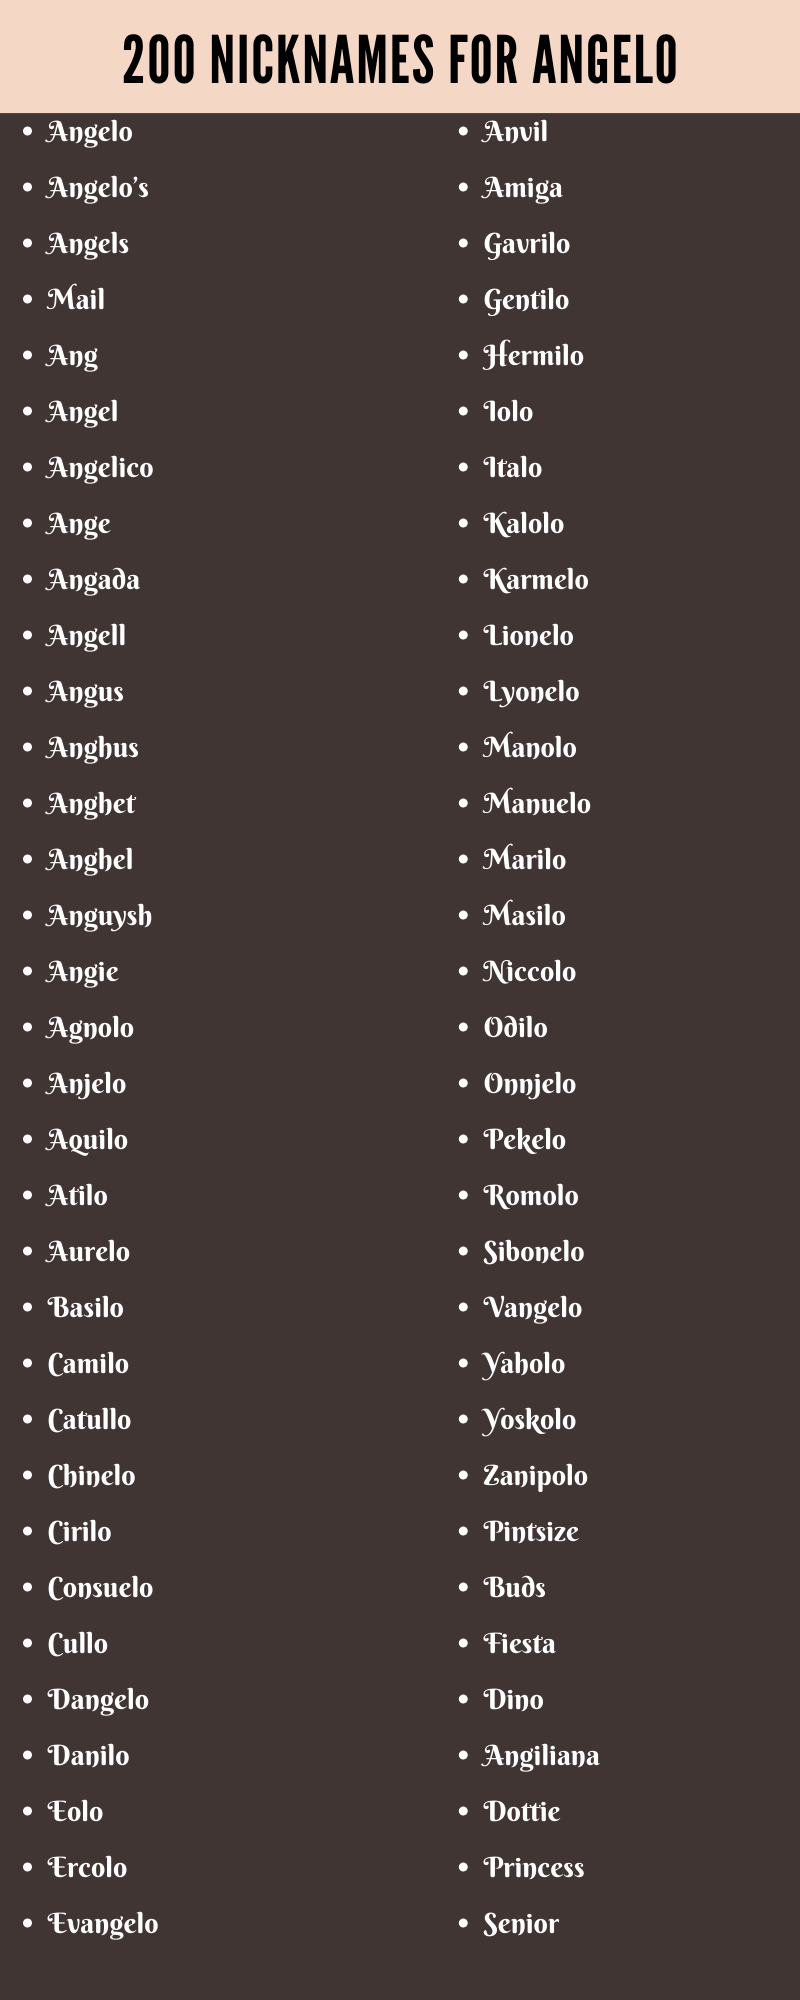 Nicknames For Angelo